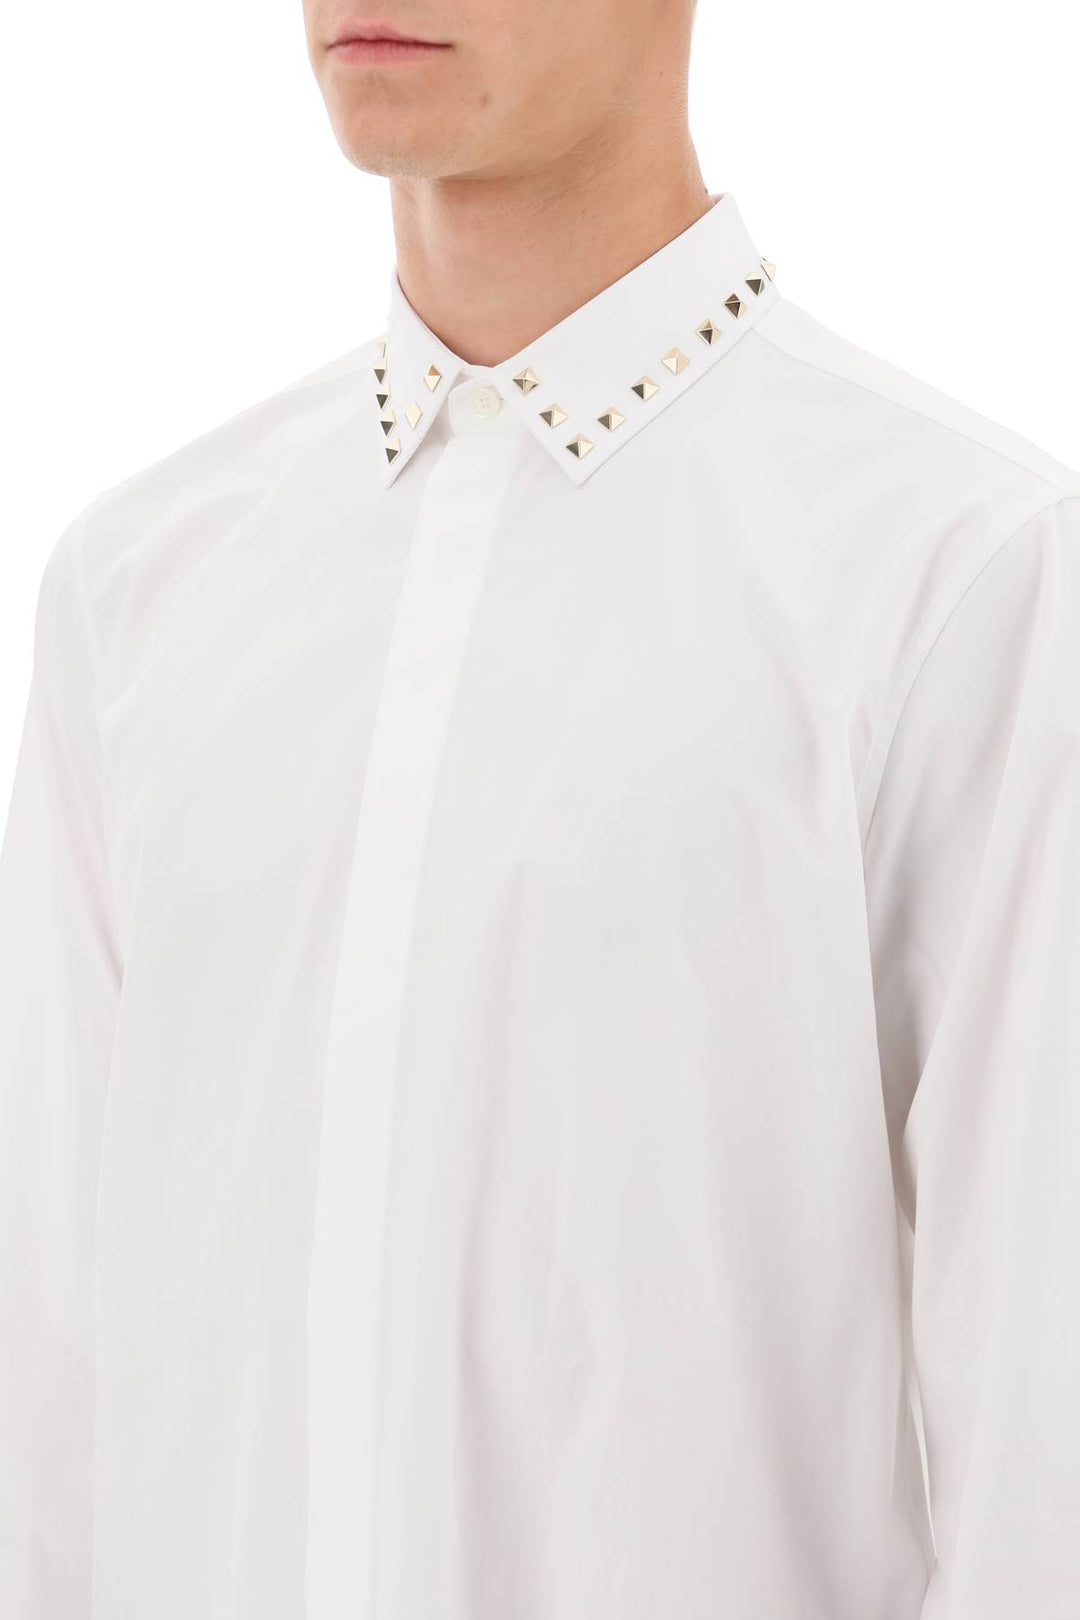 Valentino Garavani Shirt With Rockstud Untitled Studs   White